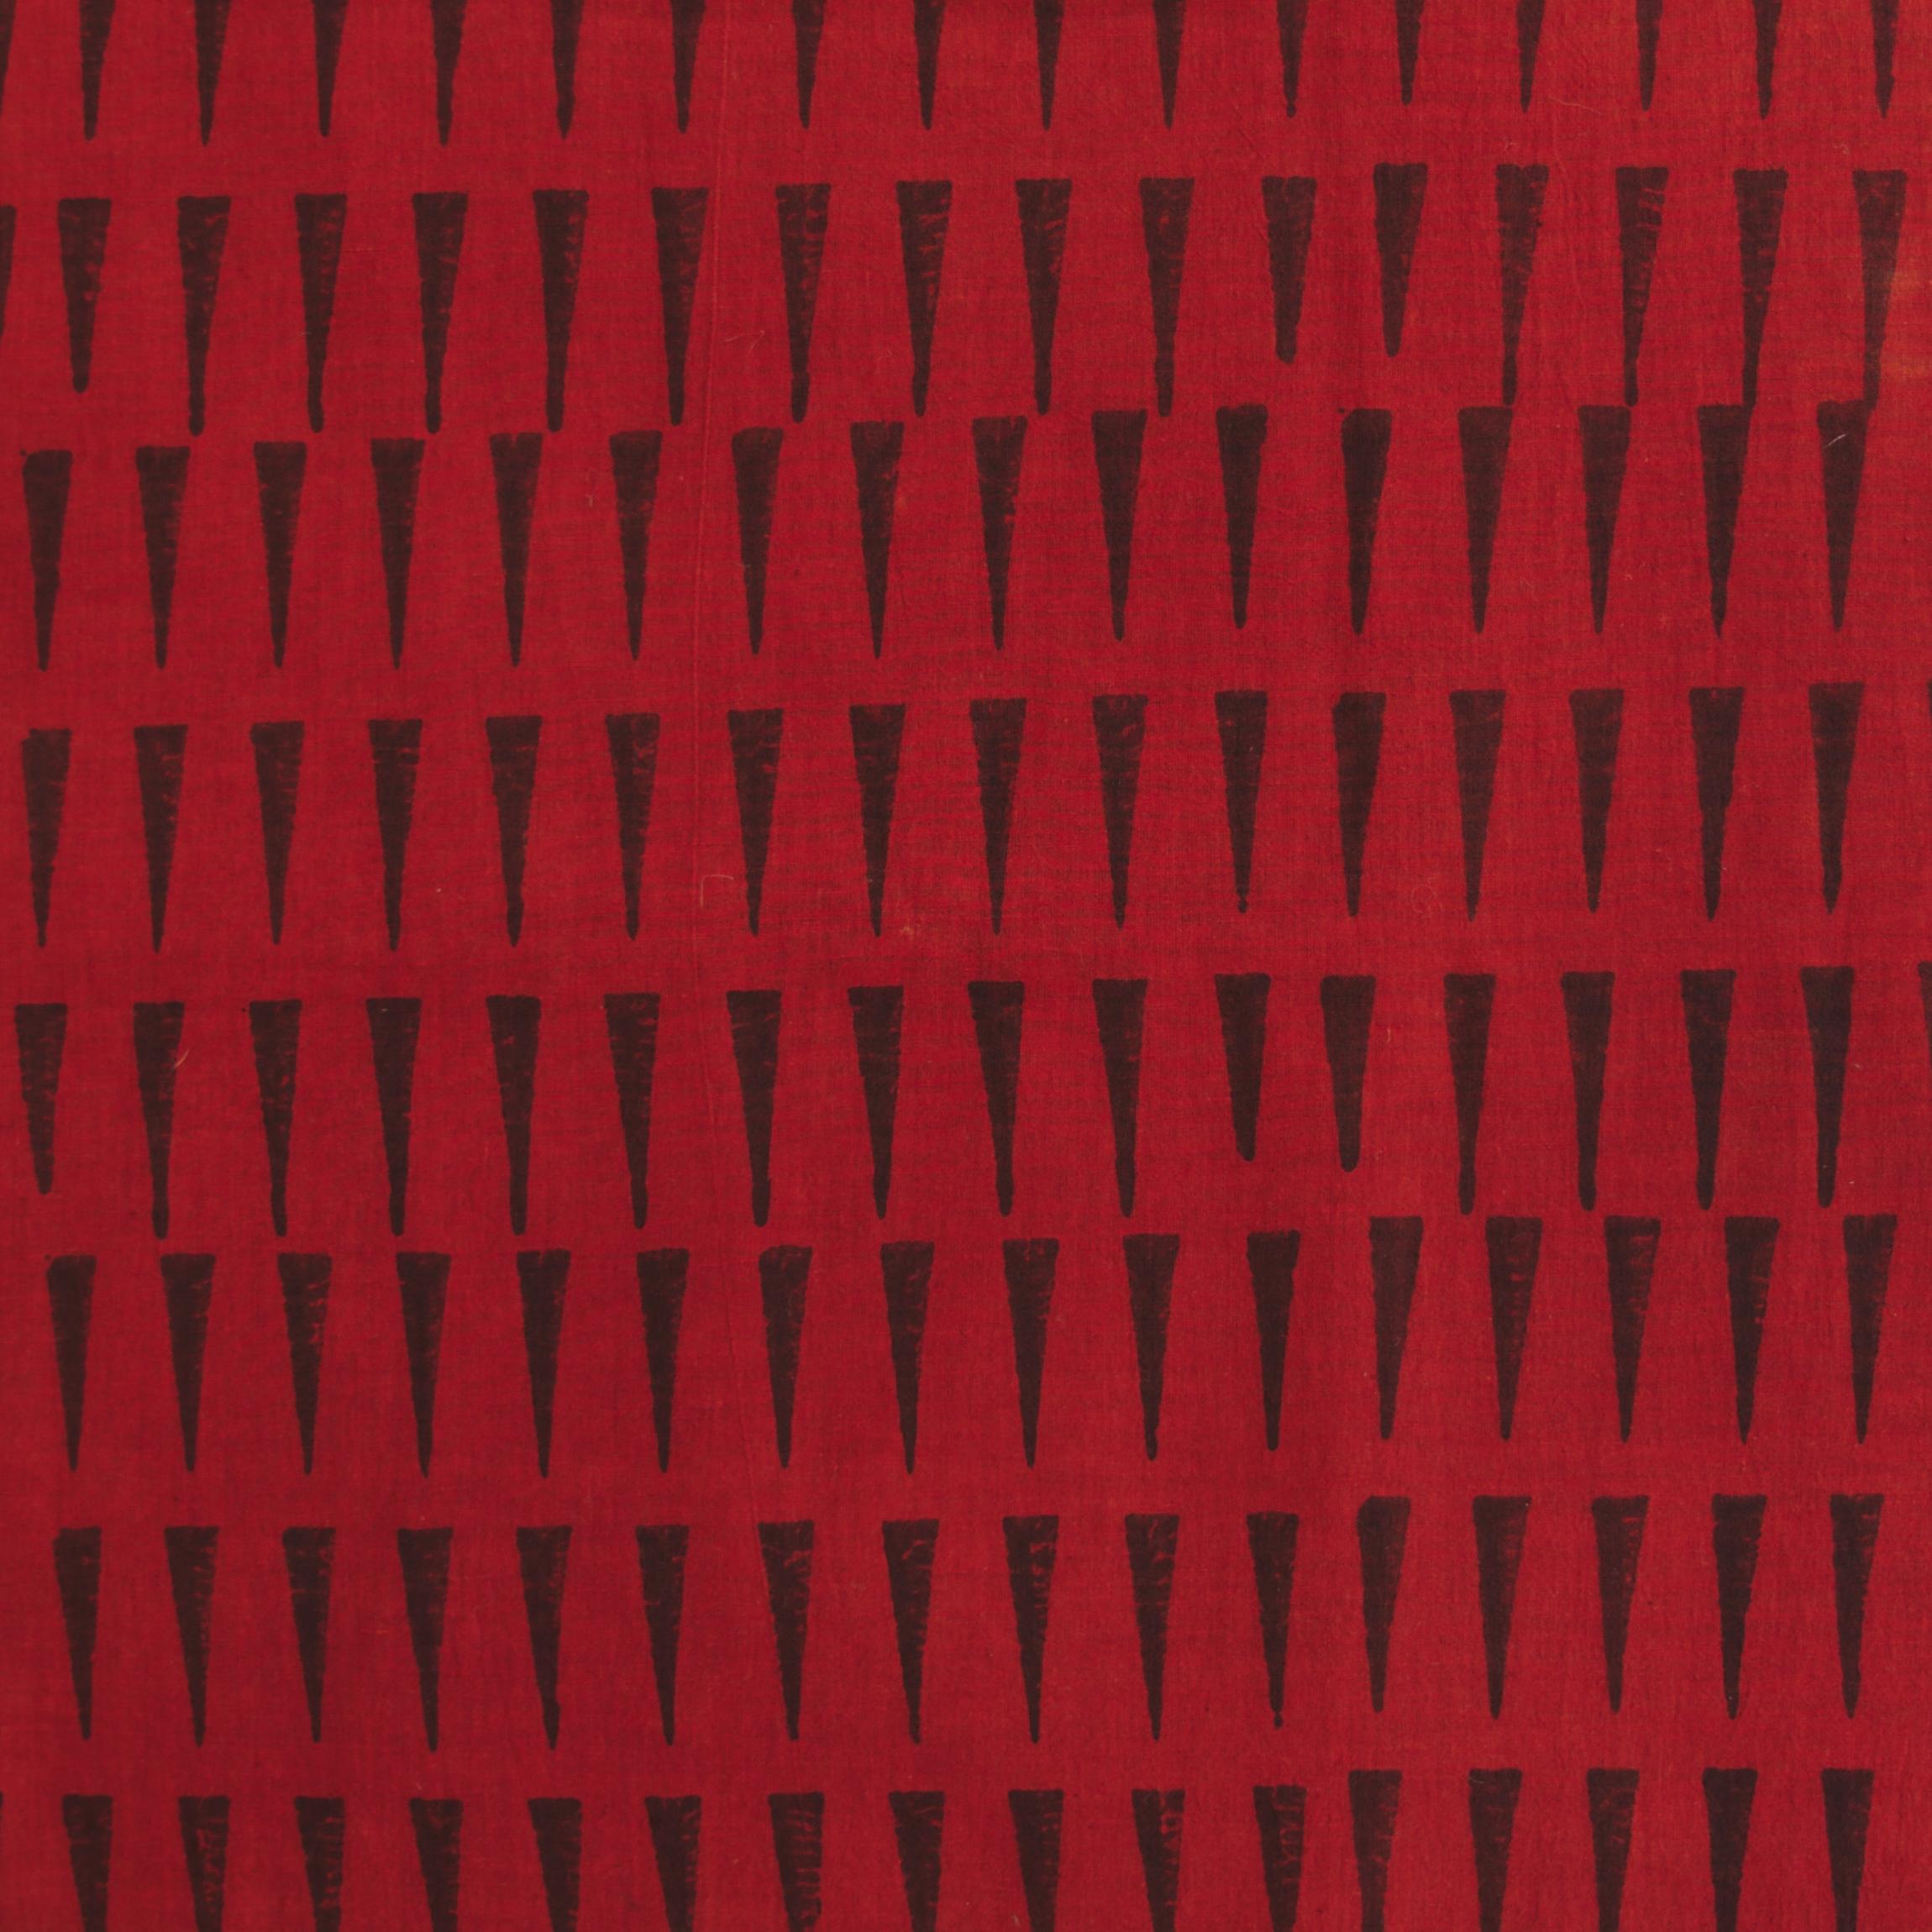 100% Block-Printed Cotton Fabric From India - Ajrak - Alizarin Black Spikes Print - Ruler